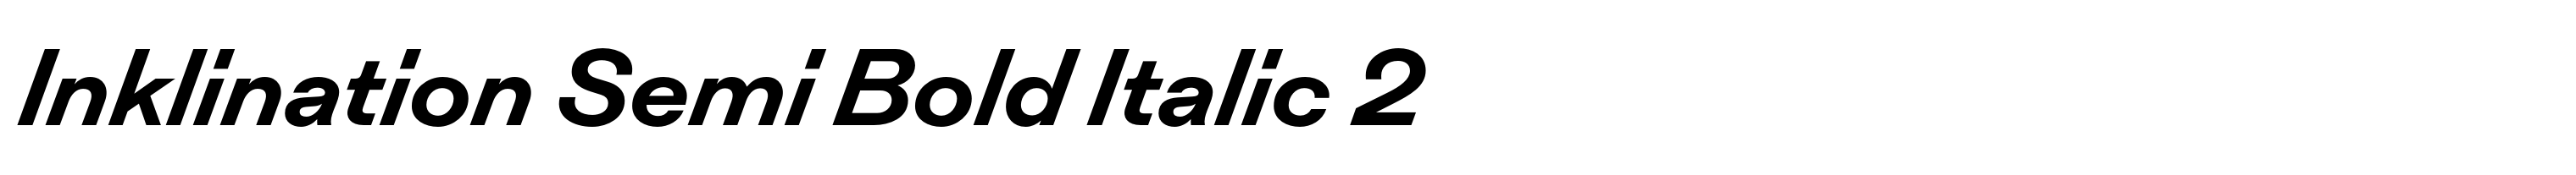 Inklination Semi Bold Italic 2